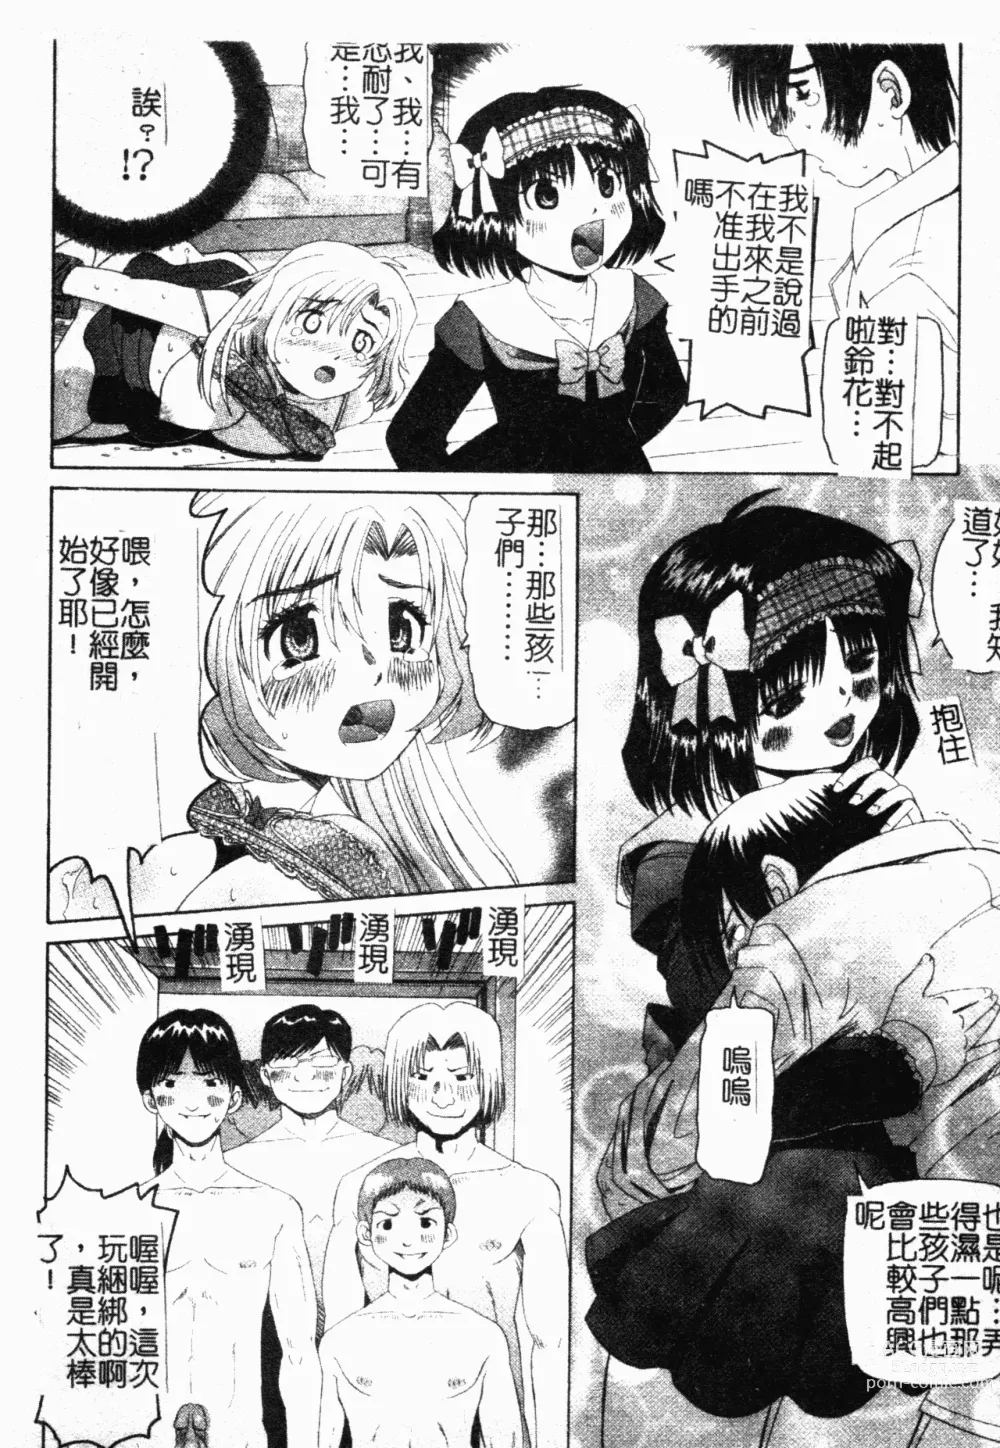 Page 176 of manga Haha Mamire